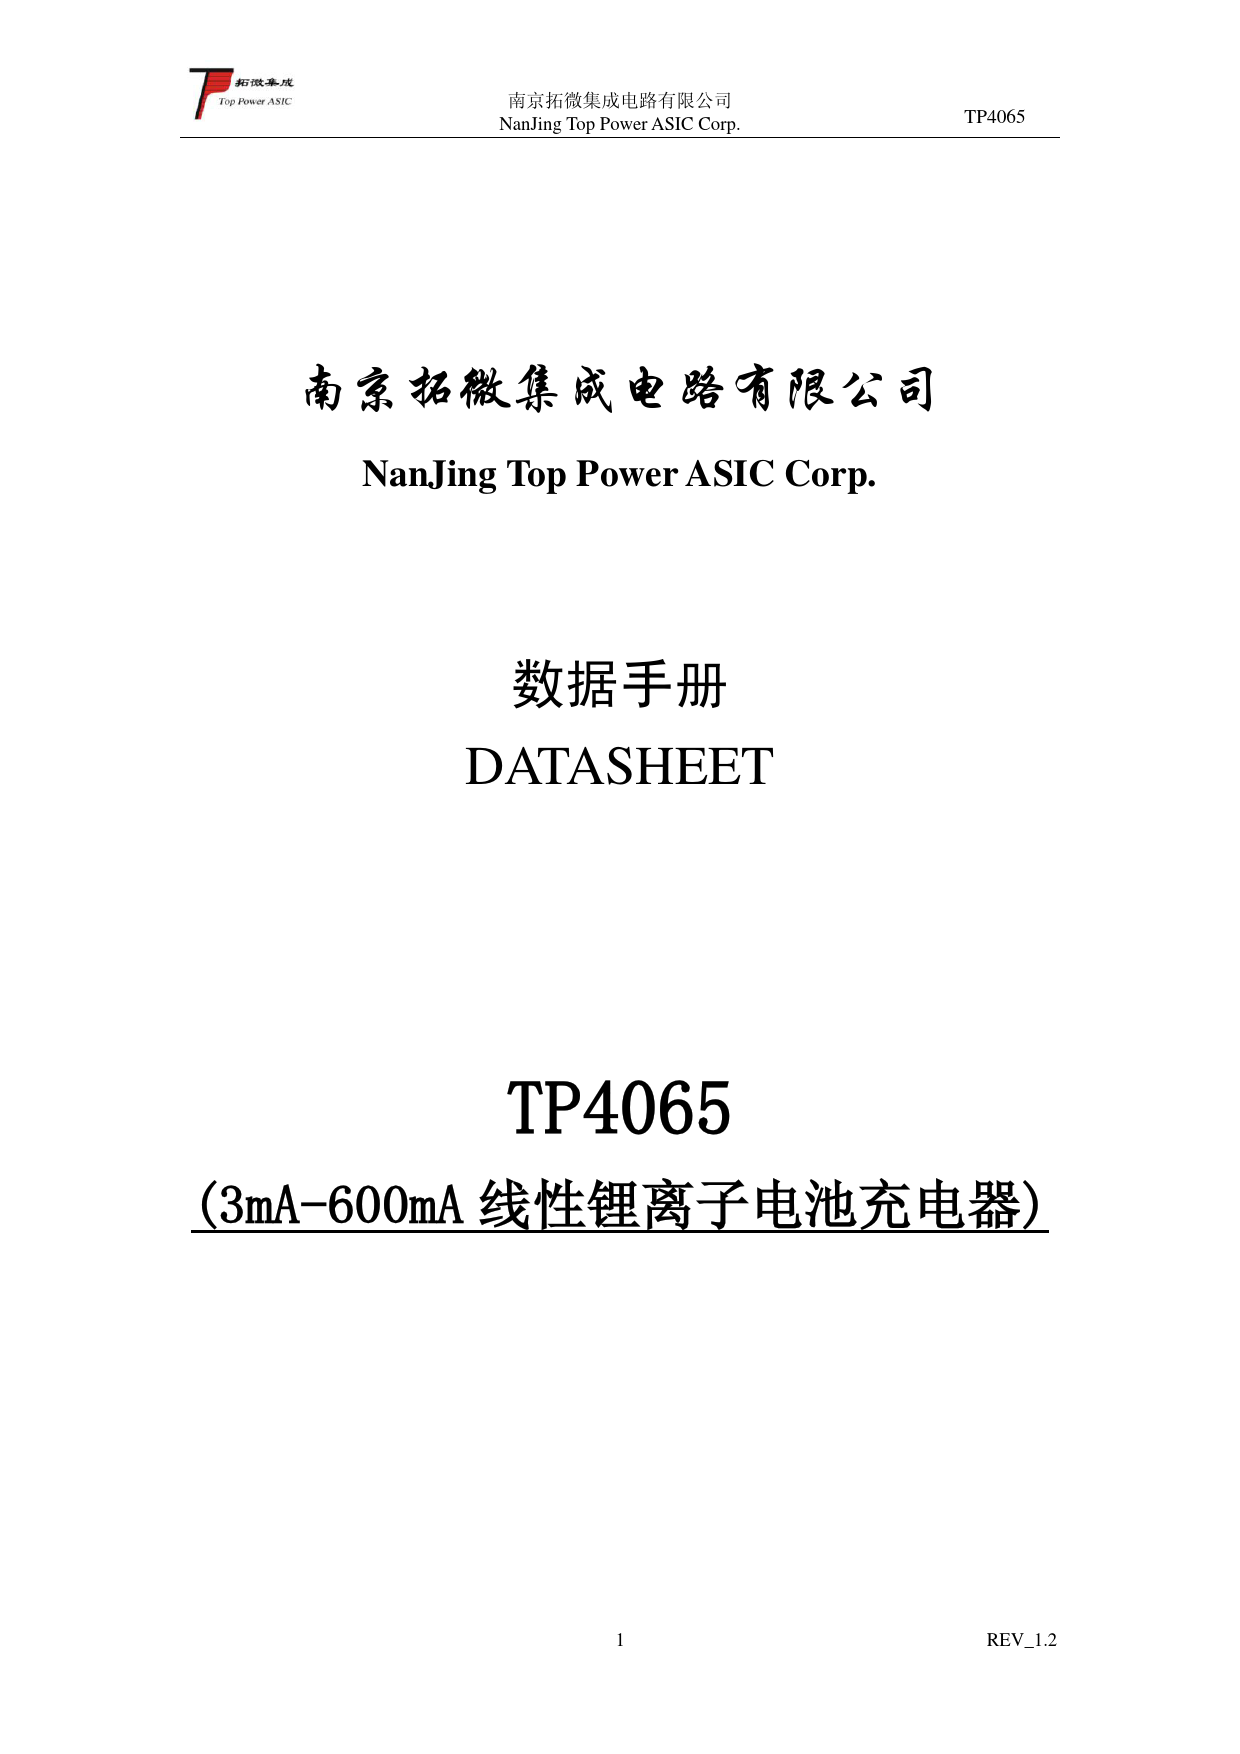 Datasheet TP4065 Top Power ASIC